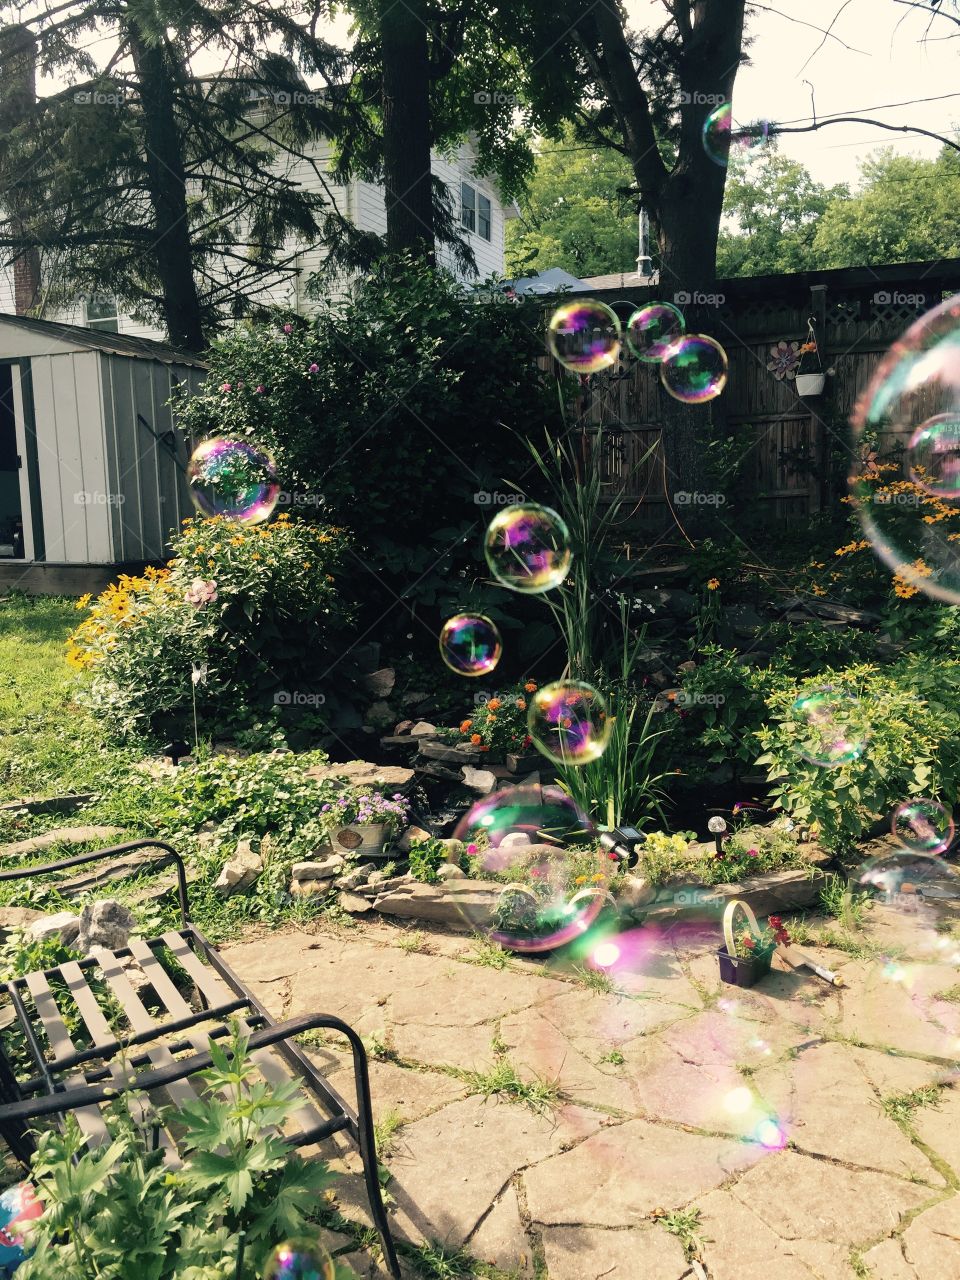 A bubbly day. 